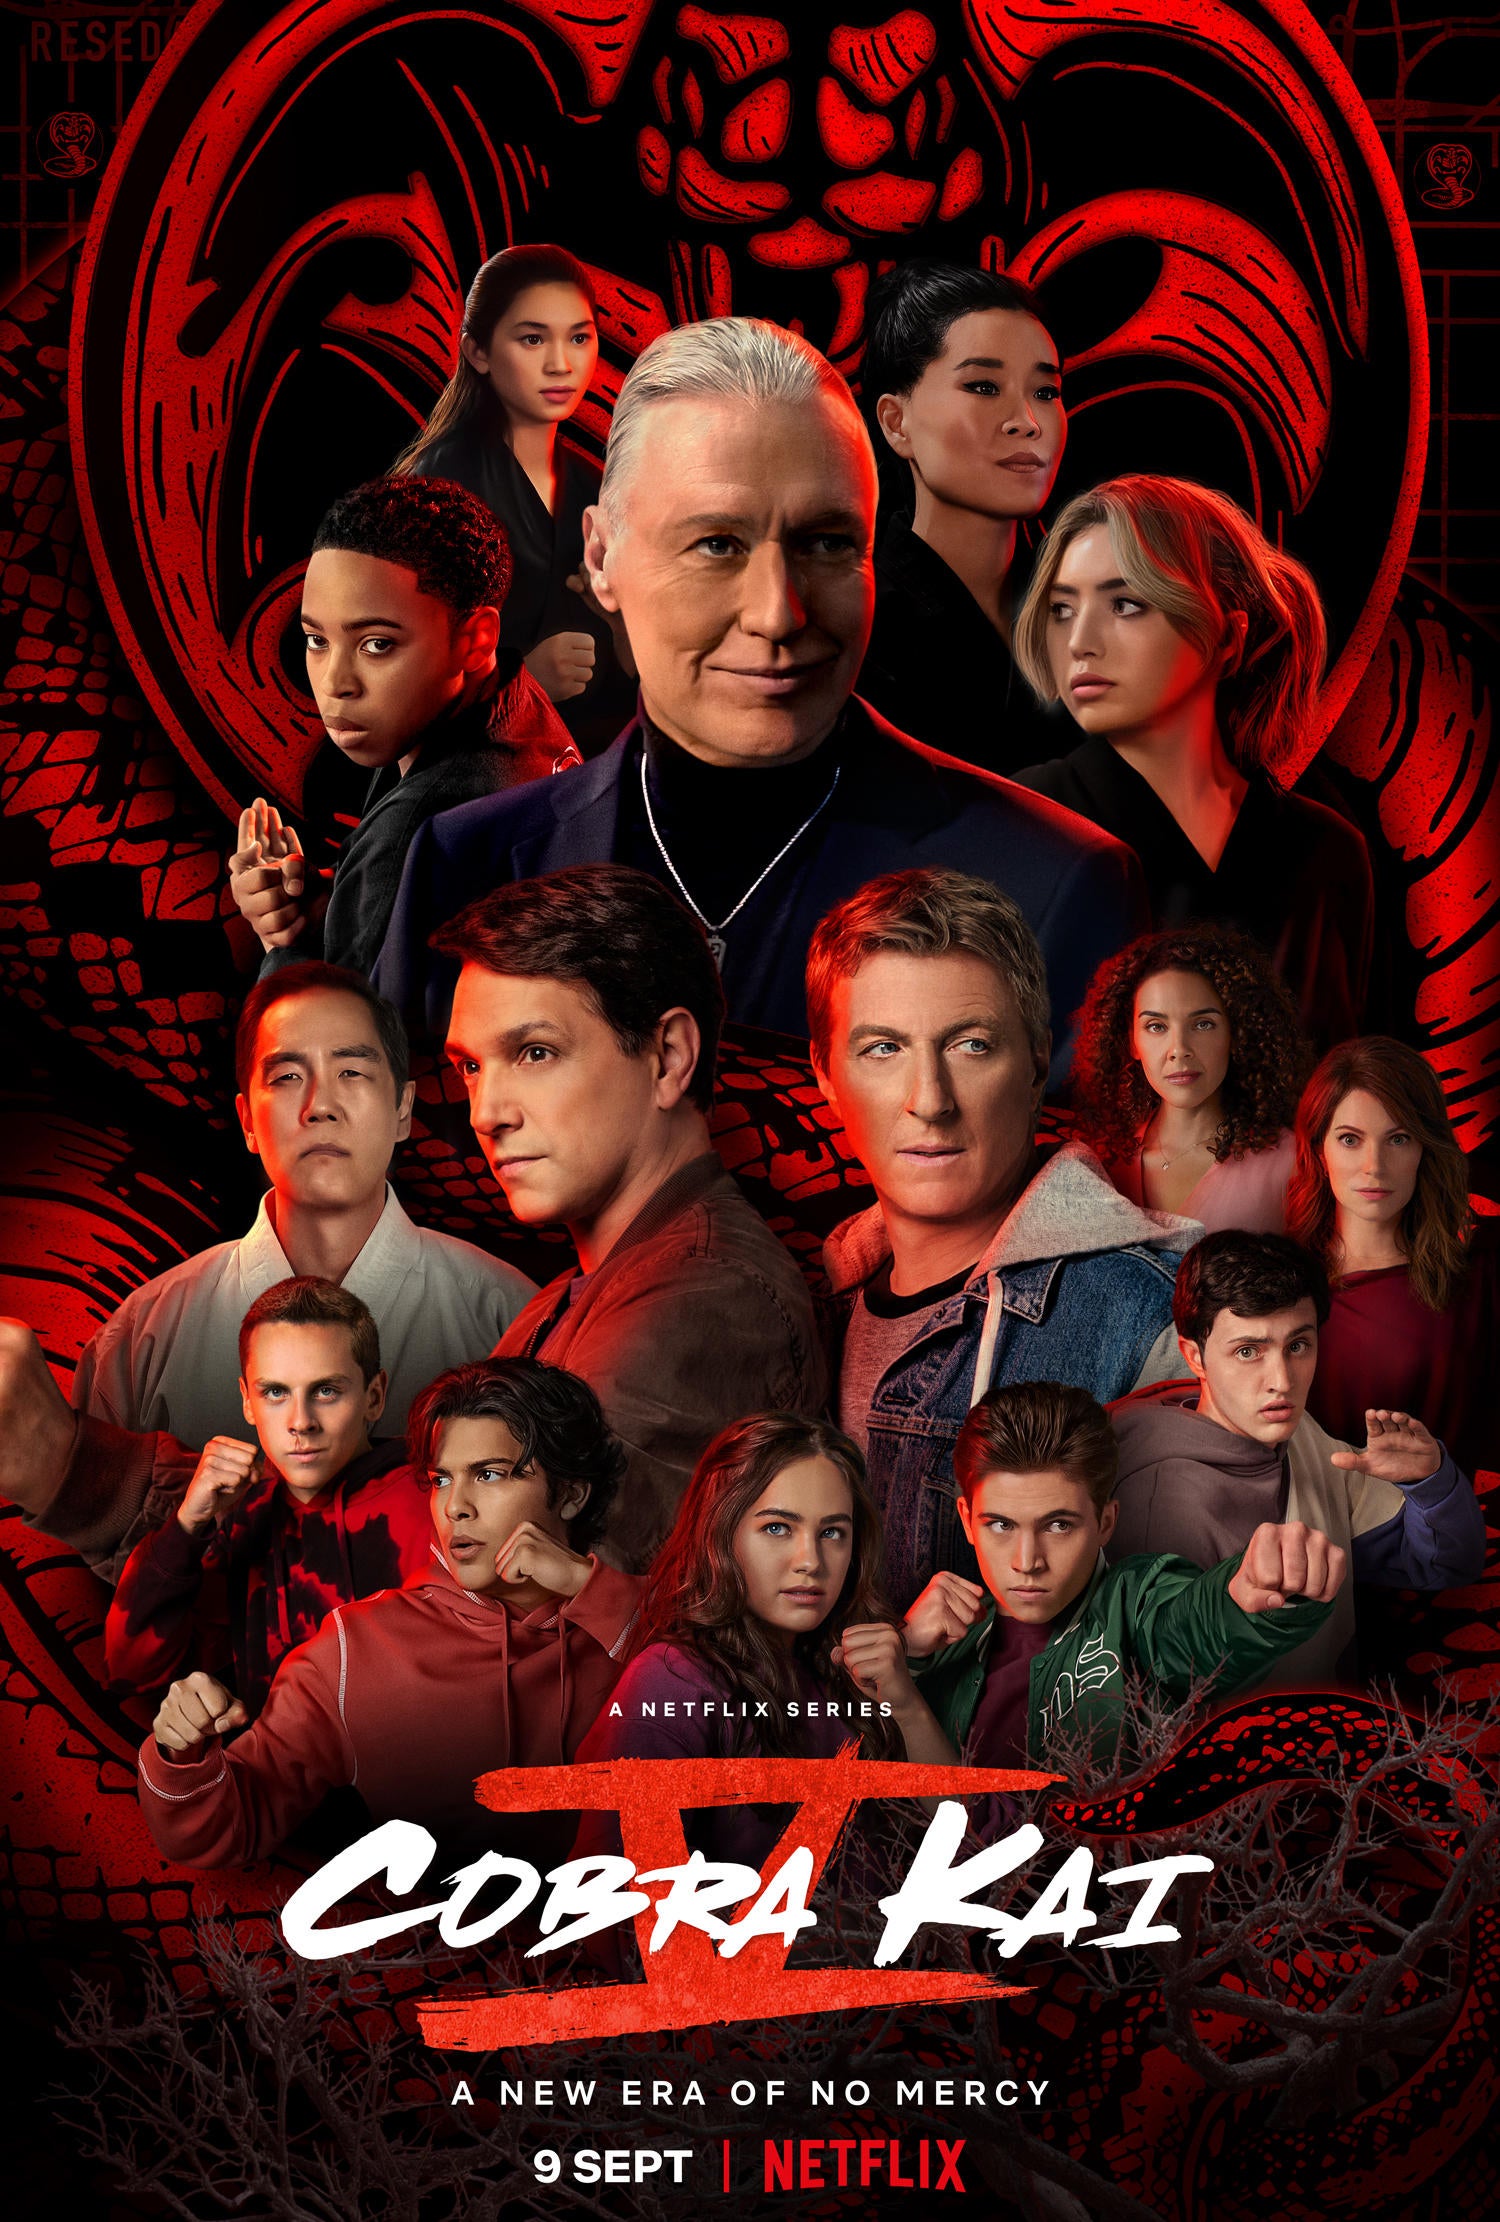 [TV] Cobra Kai Season 5 (Netflix)